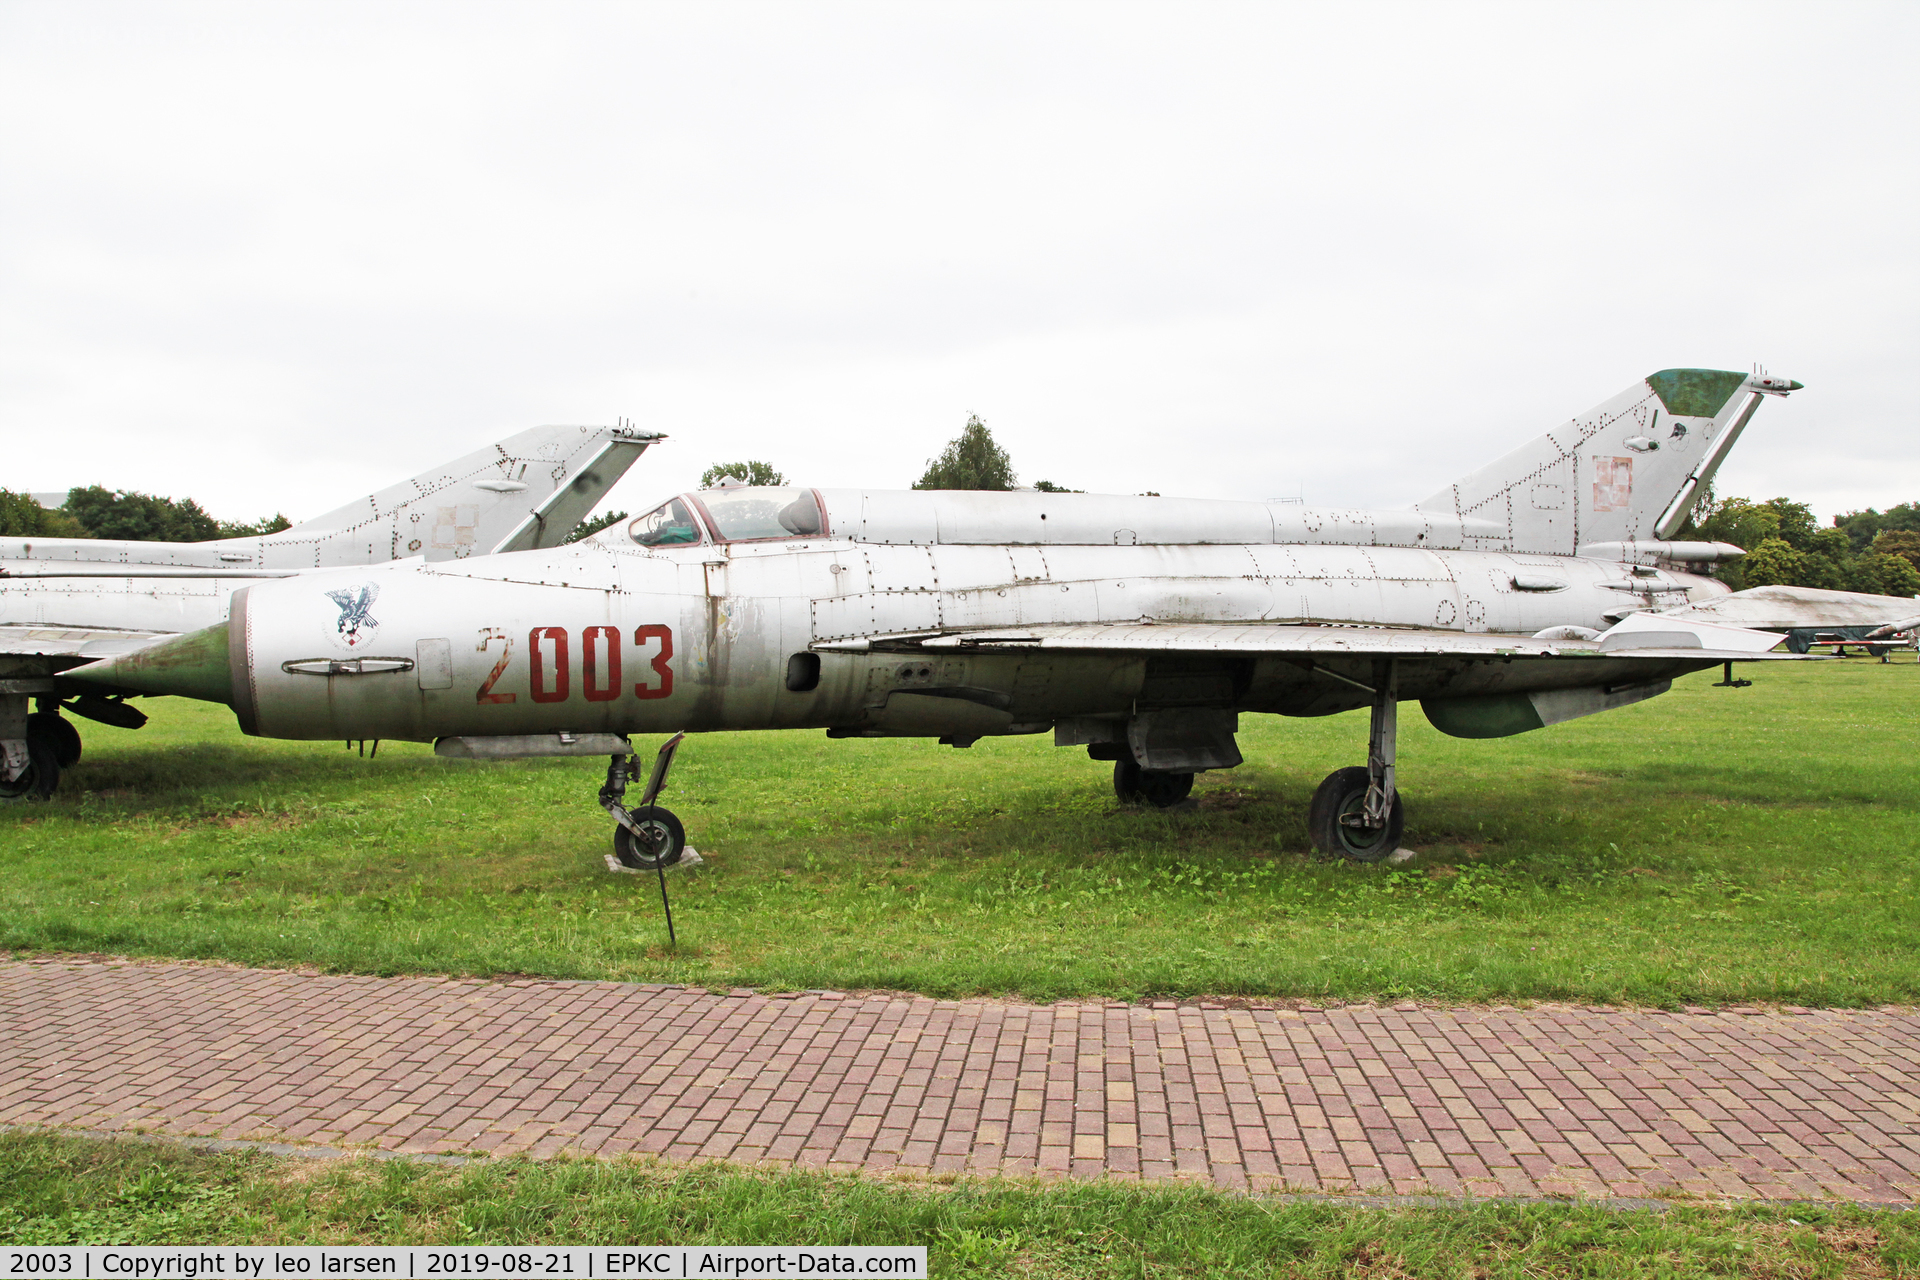 2003, 1970 Mikoyan-Gurevich MiG-21M C/N 962003, Polish Aviation Museum Krakow 21.8.2019